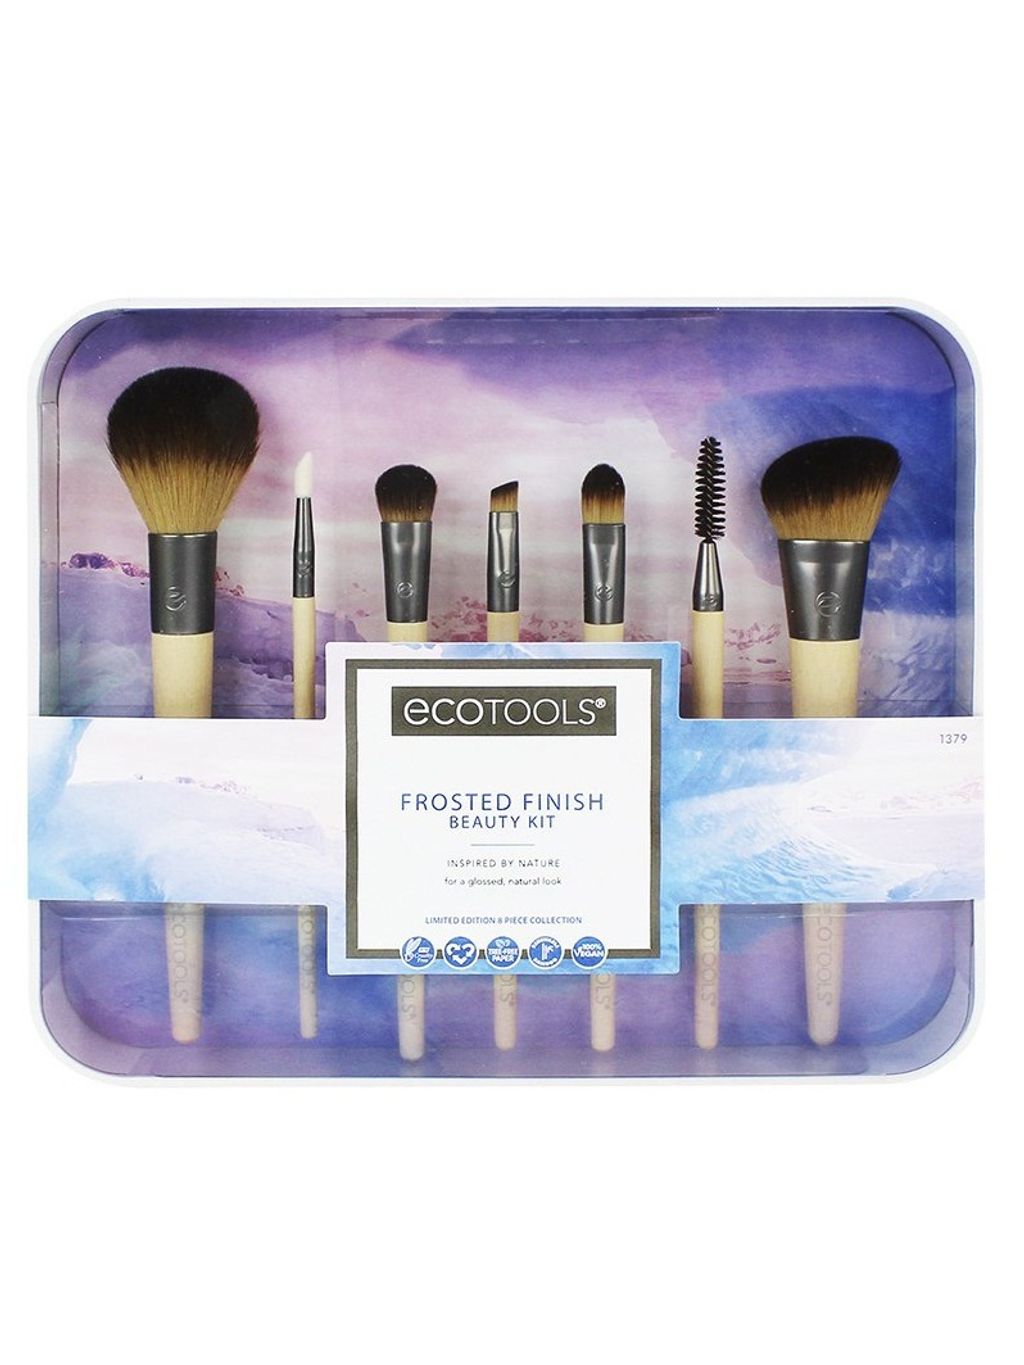 EcoTools Frosted Finish Beauty Kit.jpg